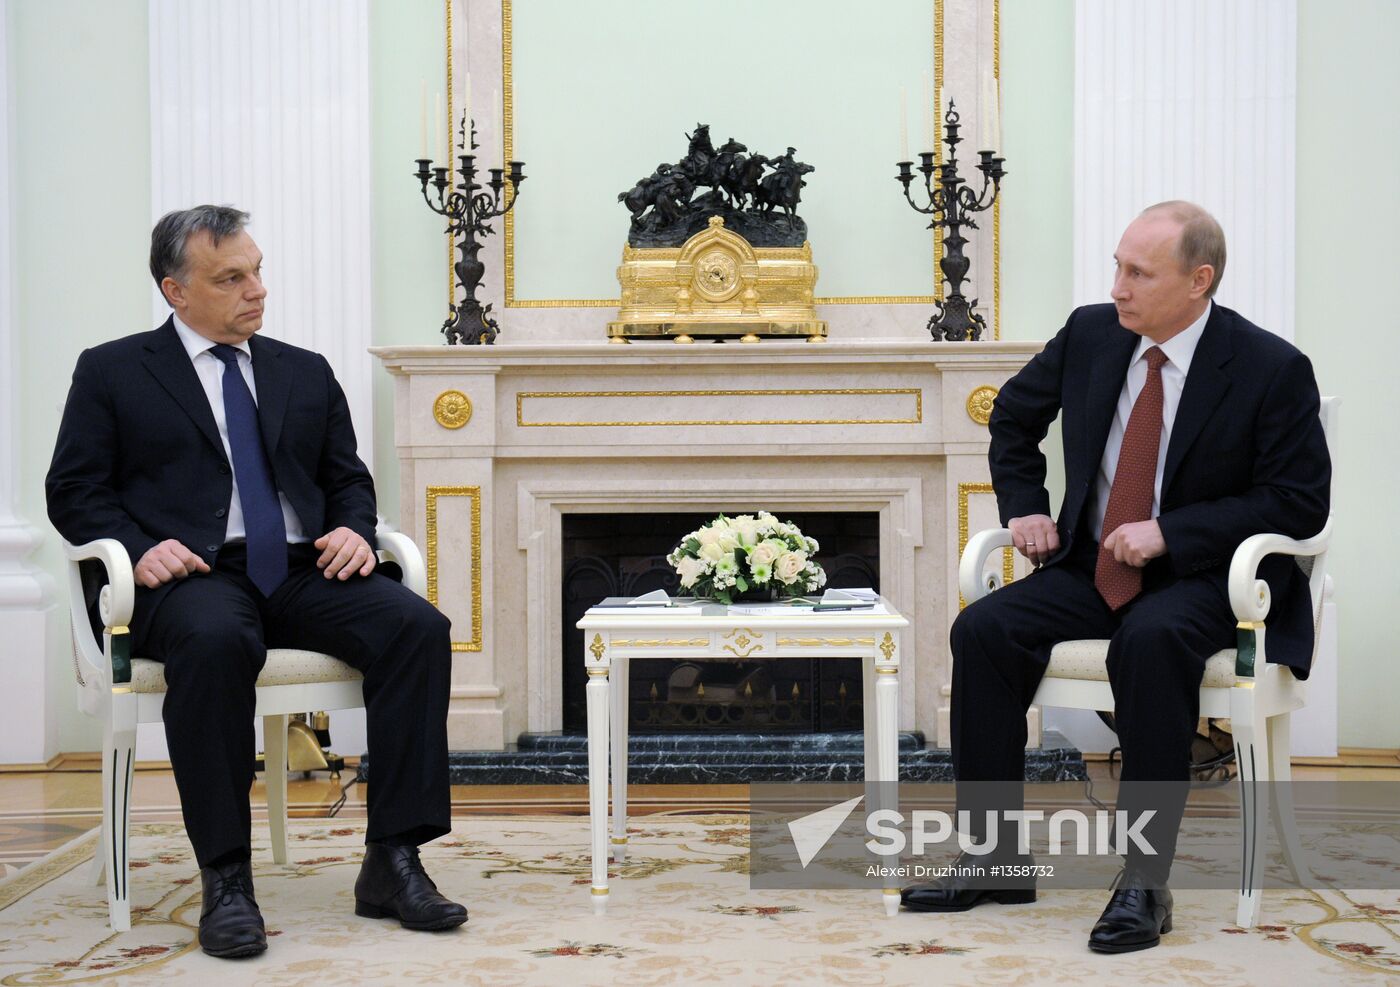 Vladimir Putin meets with Viktor Orban in the Kremlin